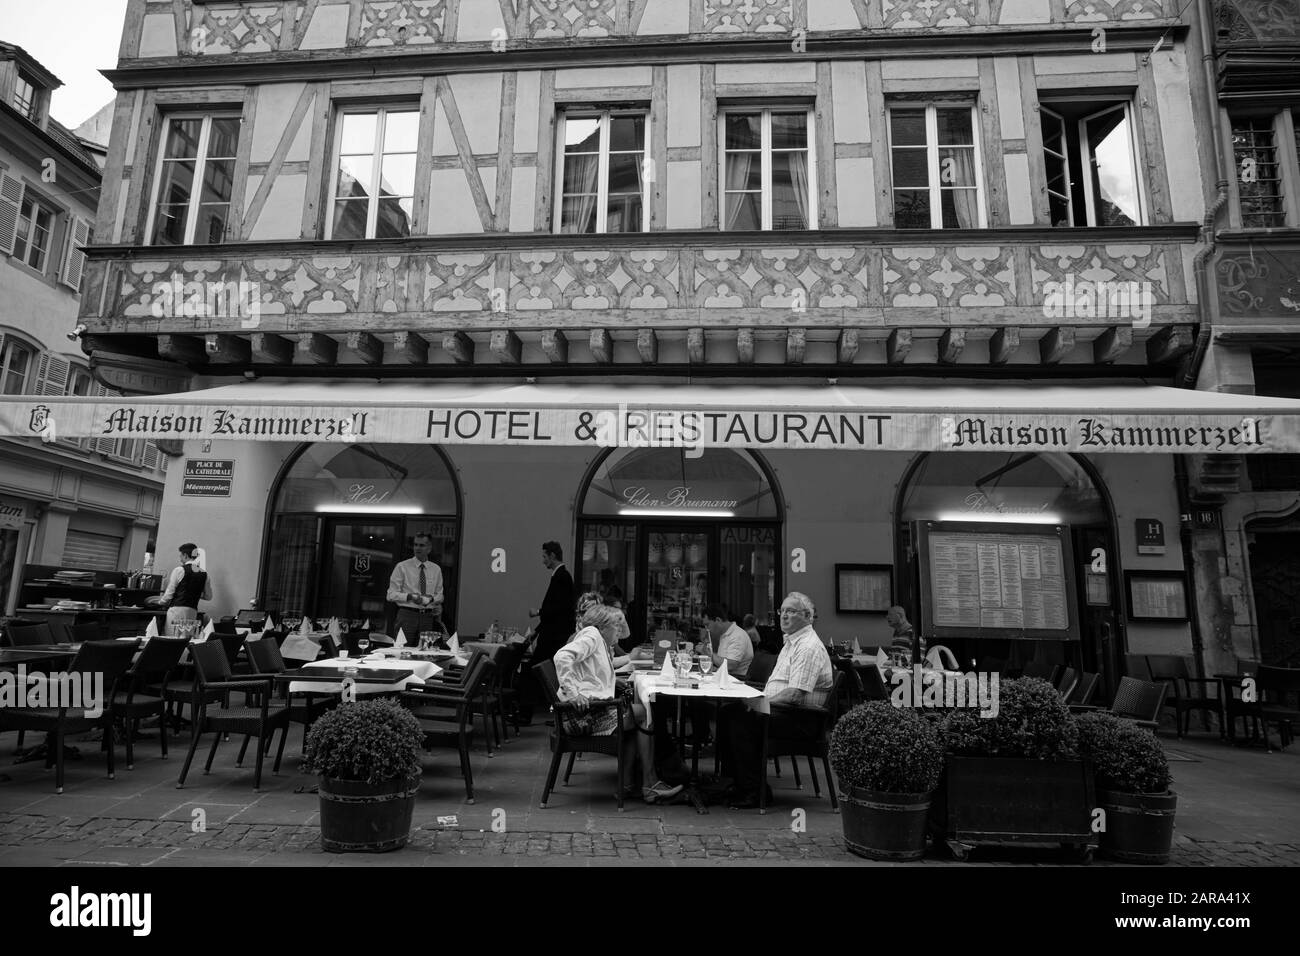 Maison Kammerzell, Hotel and Restaurant, Strasbourg, Alsace, France, Europe Stock Photo